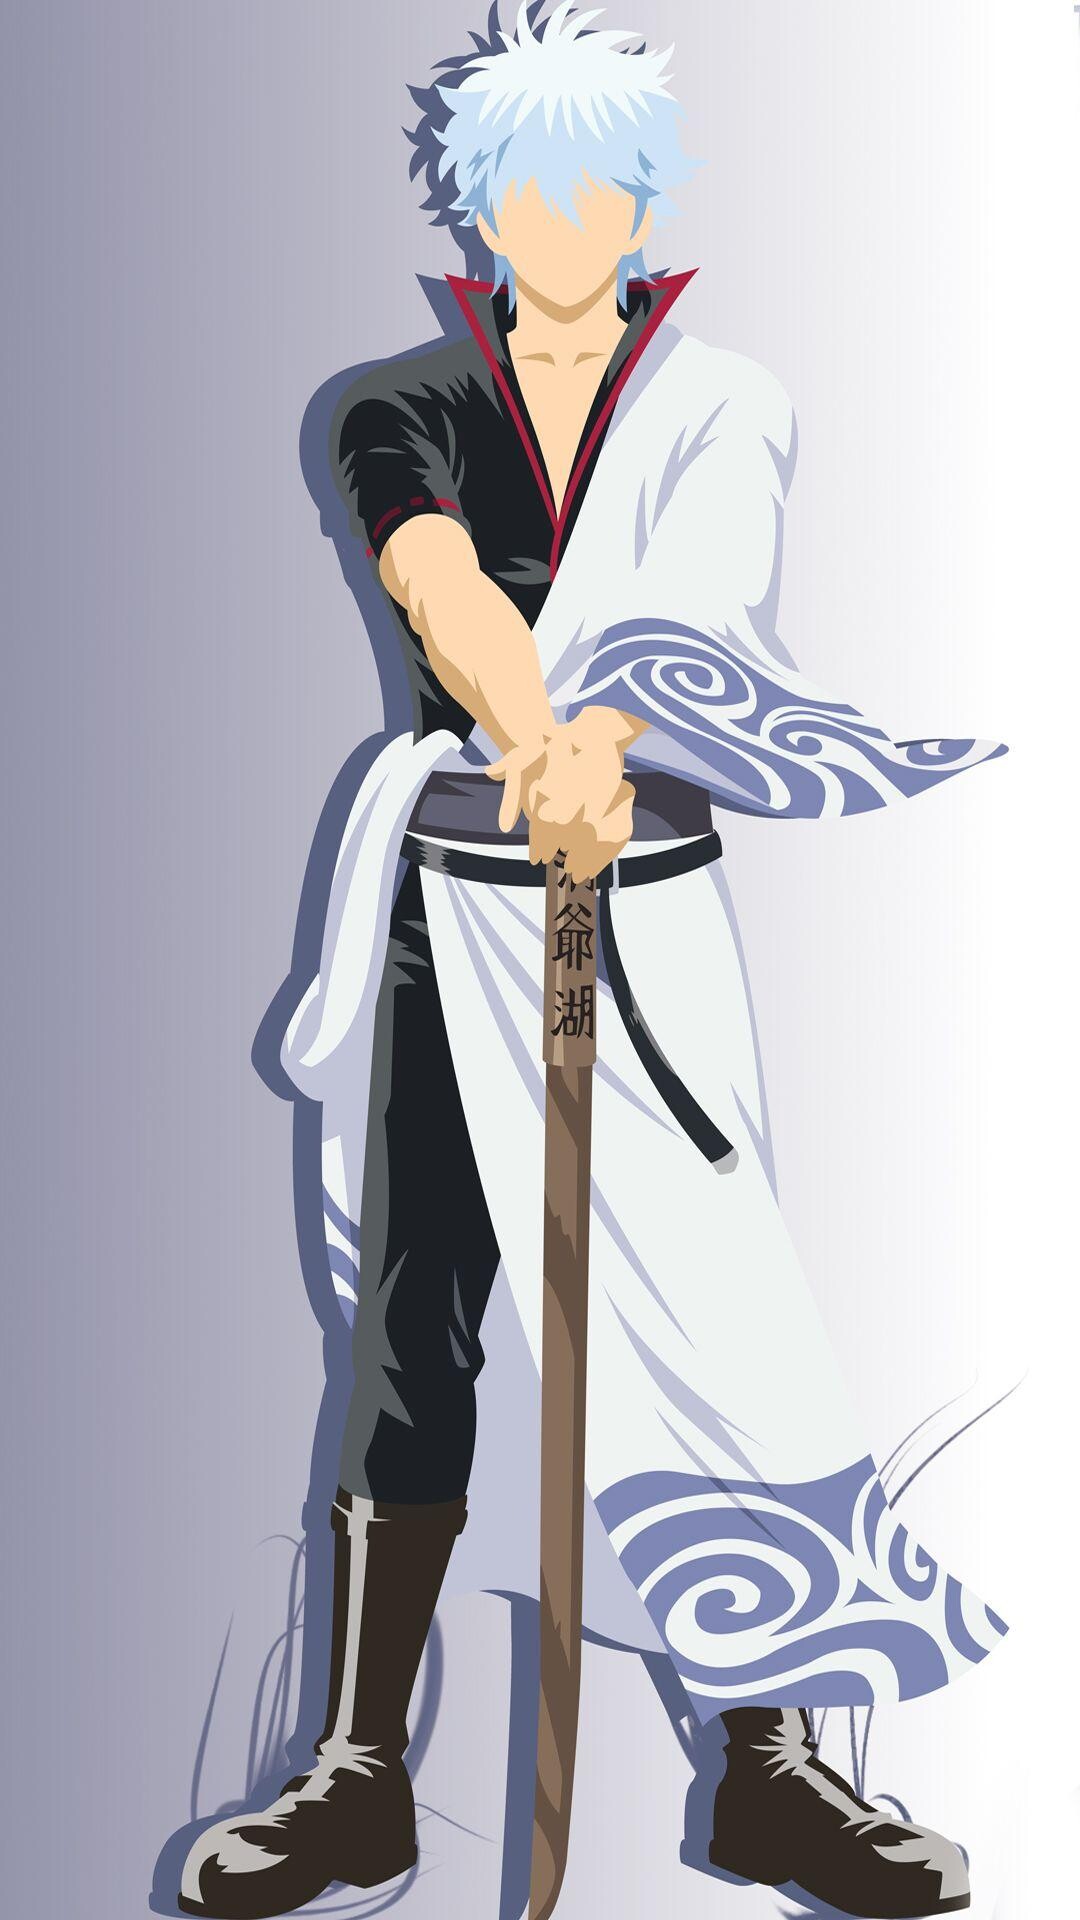 Gintama (TV Series): Sakata Gintoki, The founder and president of the Yorozuya, A highly-skilled samurai. 1080x1920 Full HD Wallpaper.